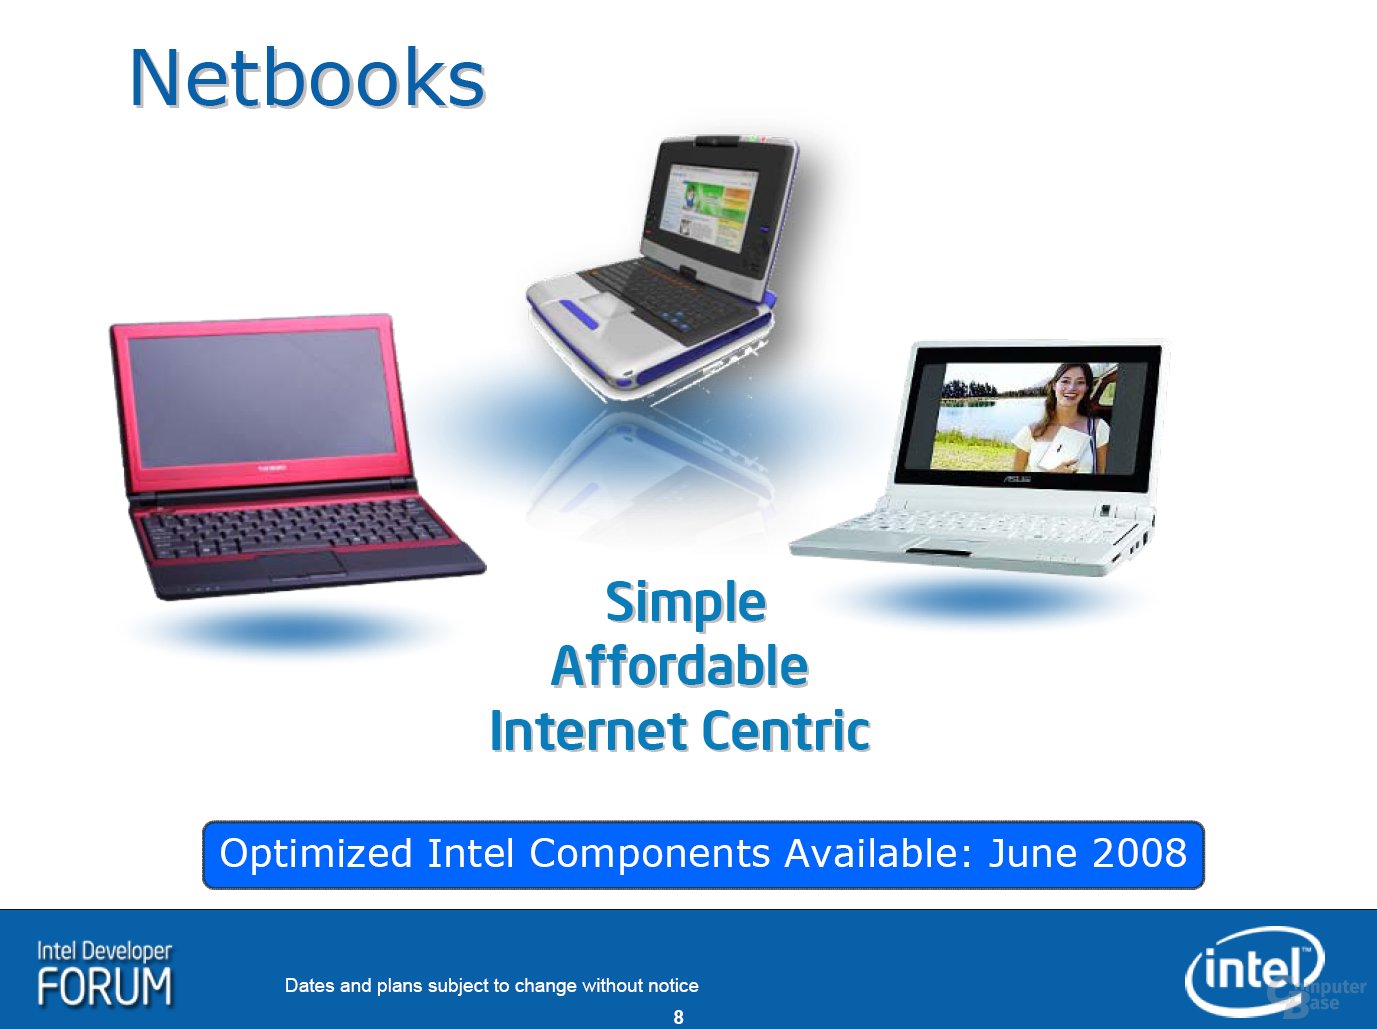 Intel Netbooks (IDF Spring 2008)